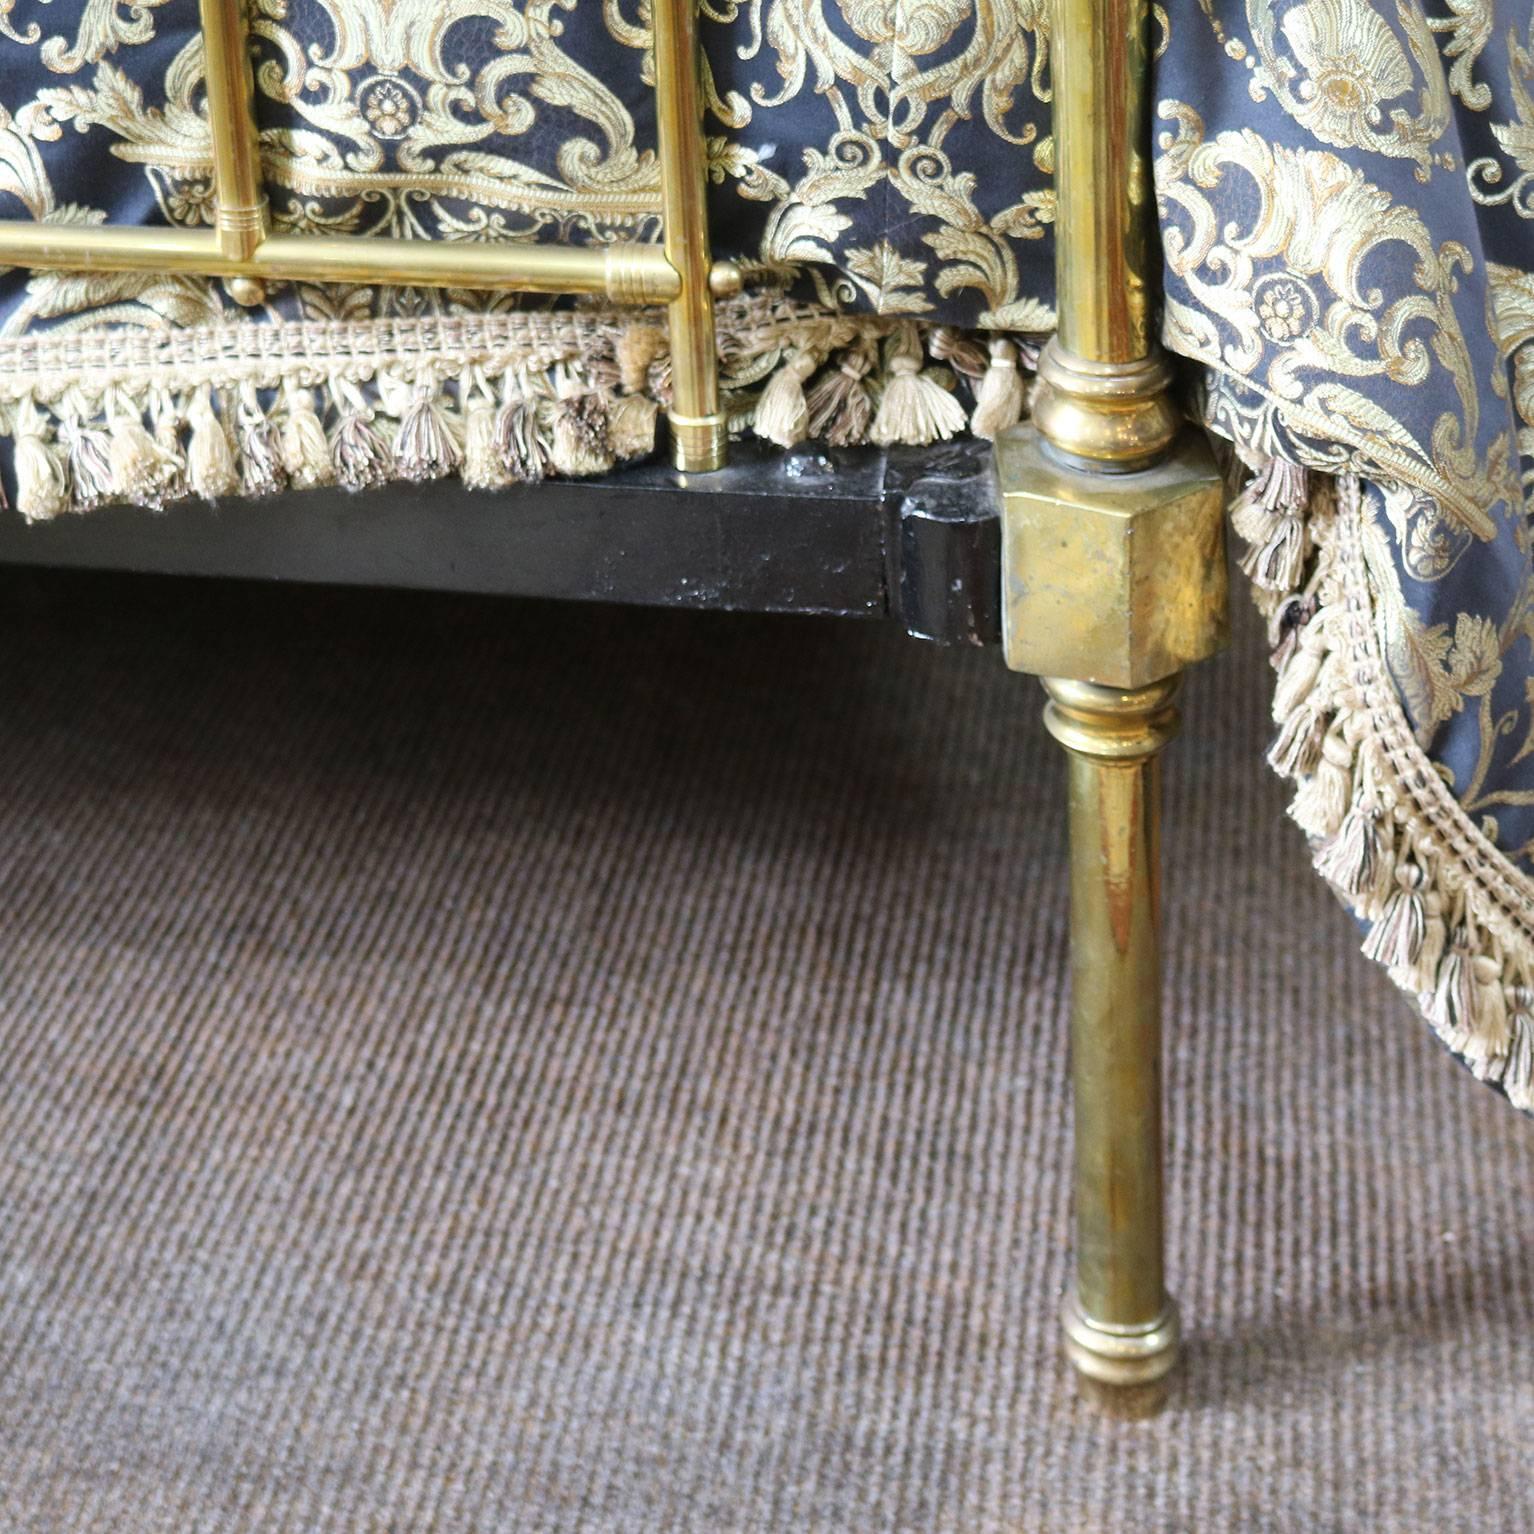 19th Century Ornate Brass Bed MK109